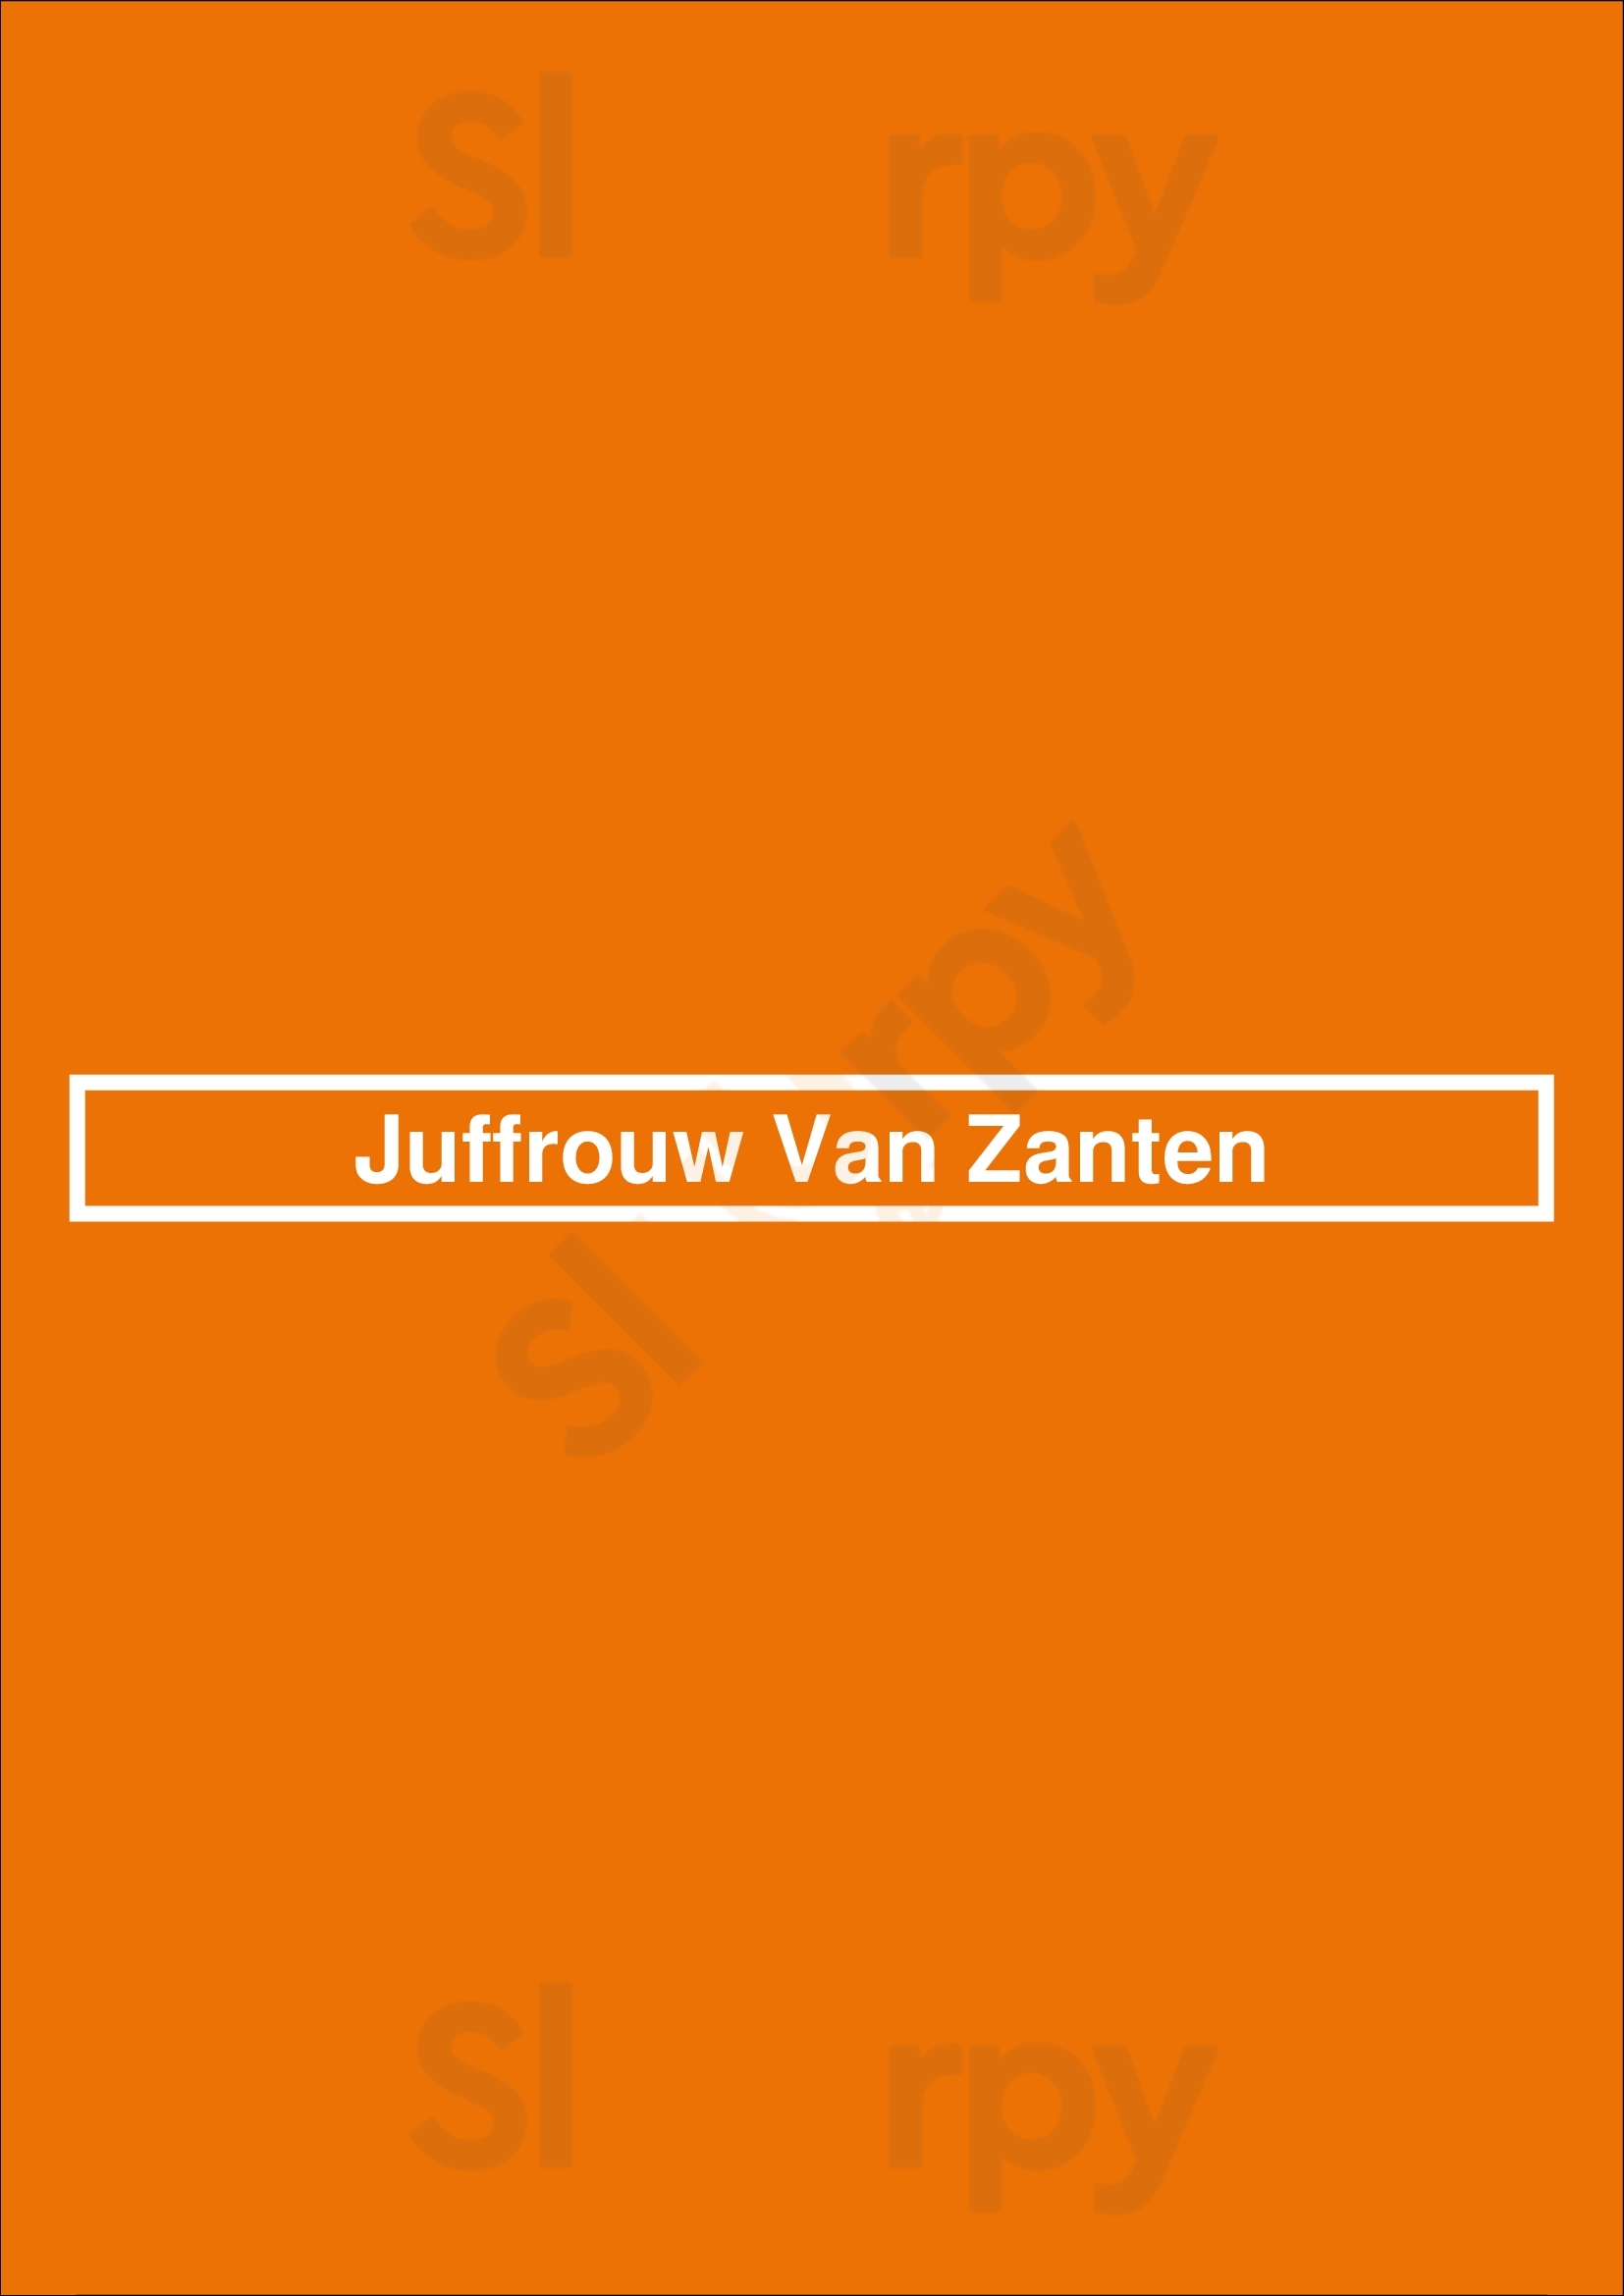 Juffrouw Van Zanten Rotterdam Menu - 1